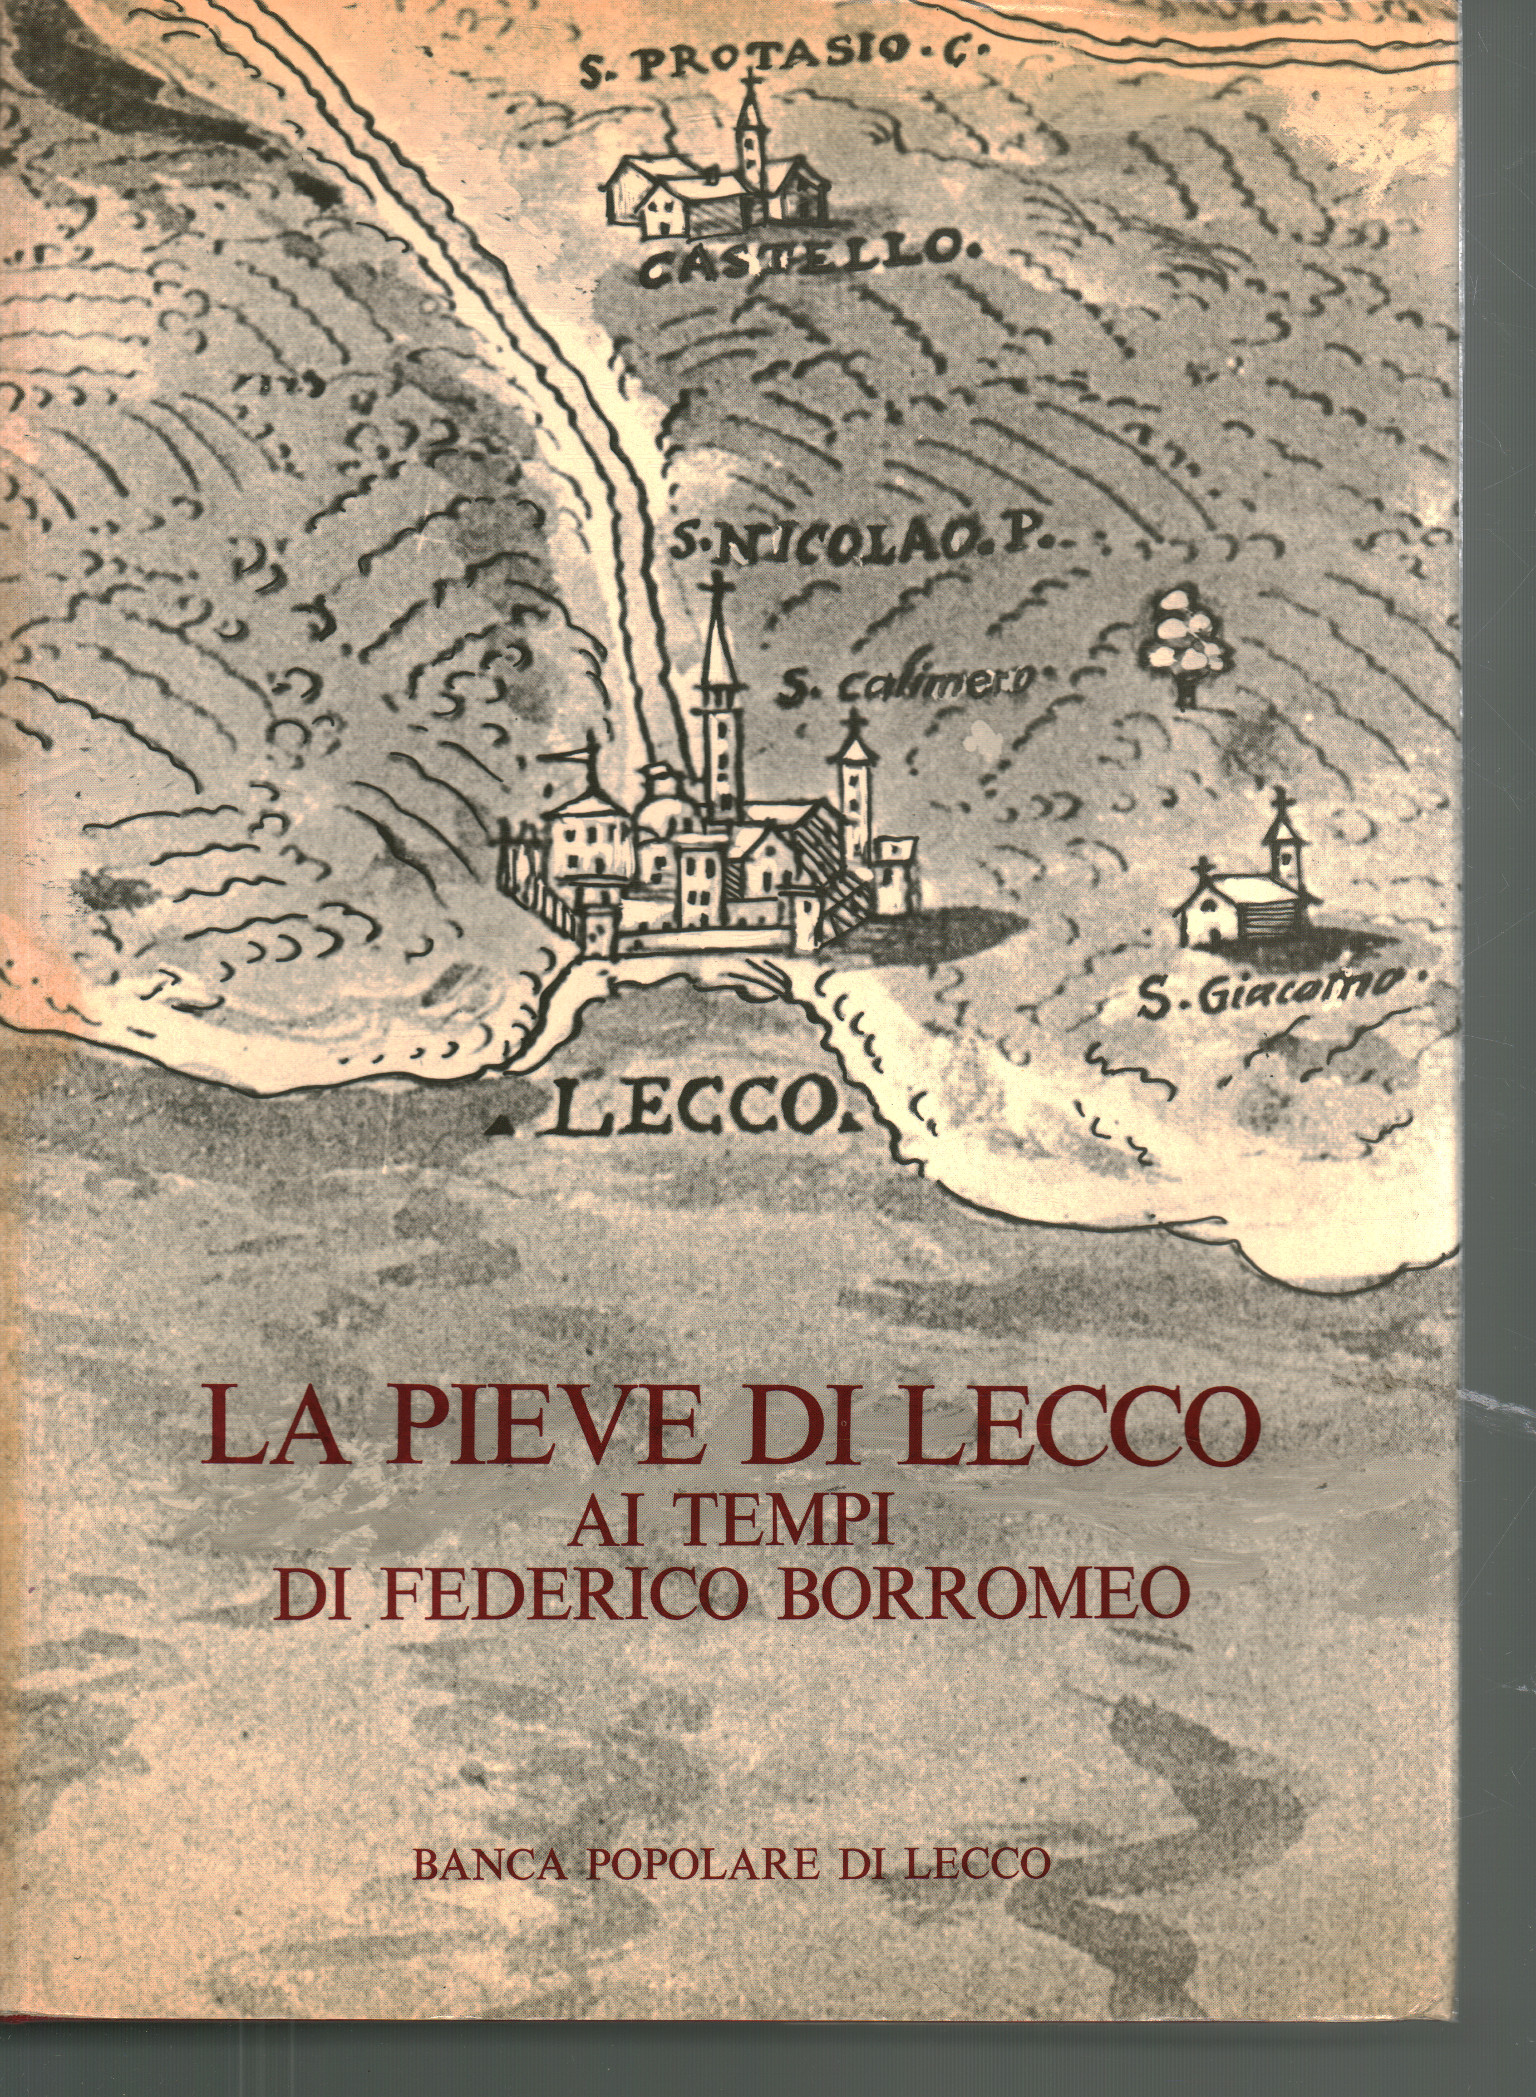 Die Pieve di Lecco in der zeit Friedrichs Borromeo, Carlo Marcora